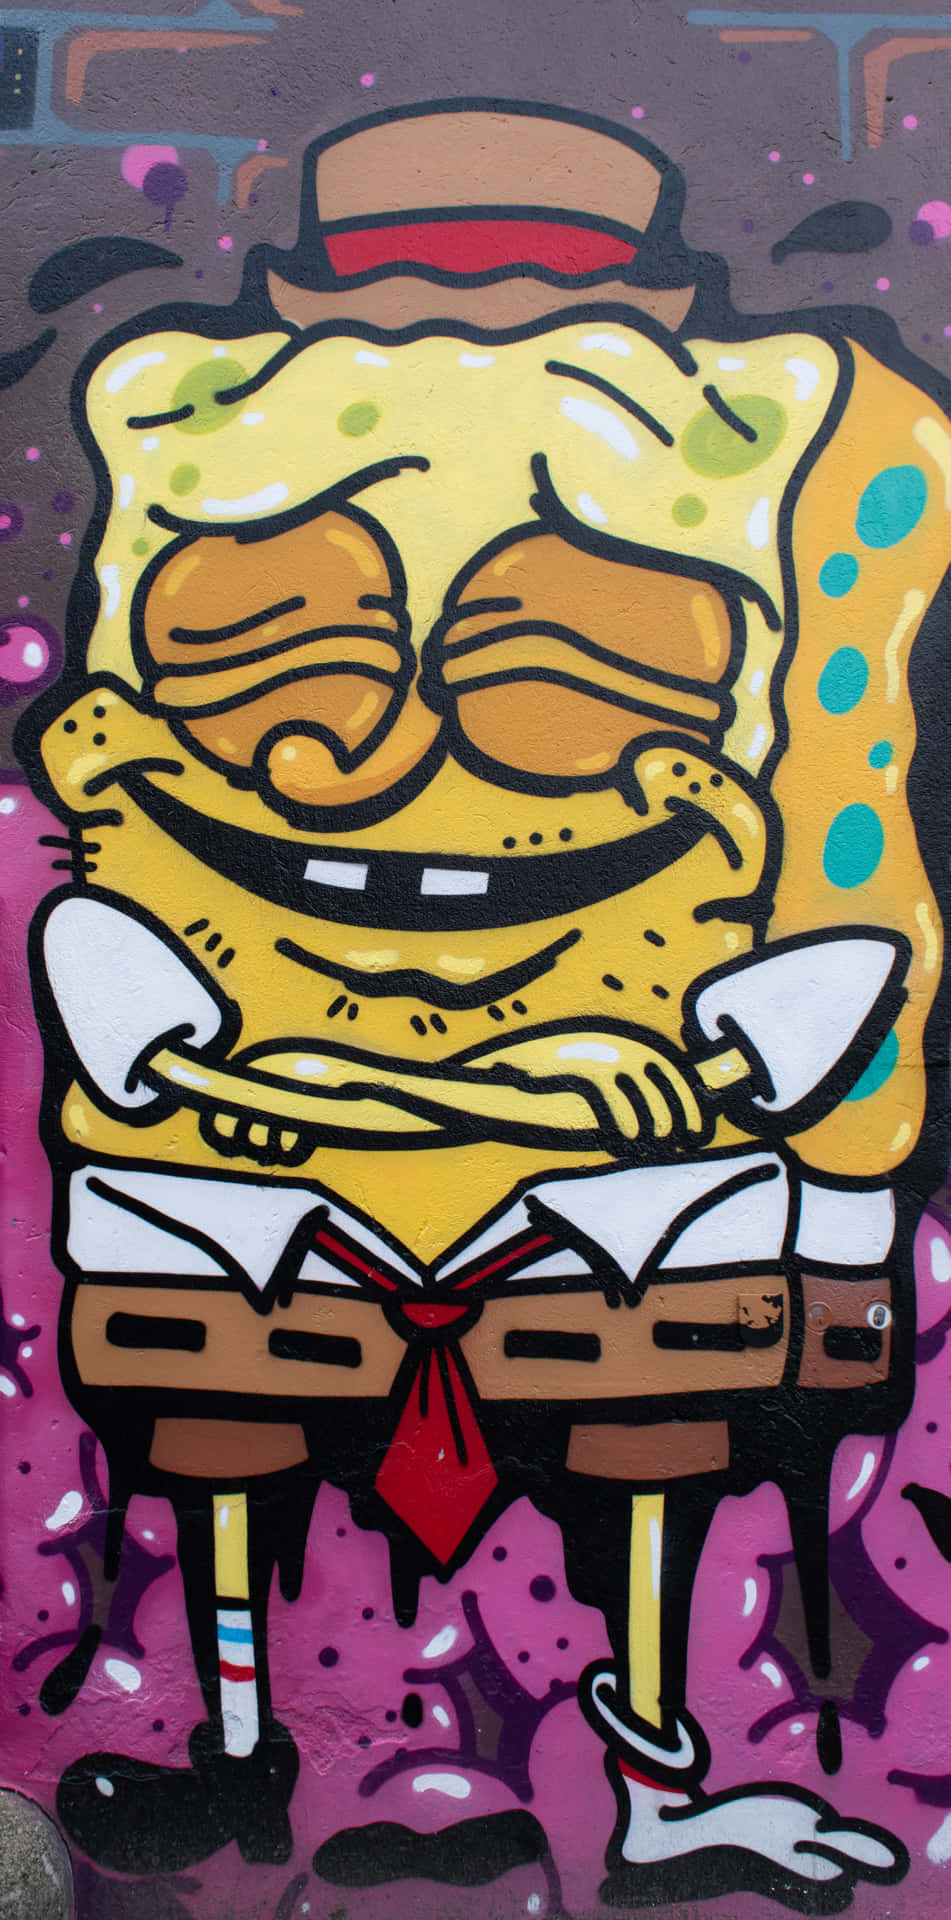 Immaginedi Fan-art Di Spongebob Squarepants